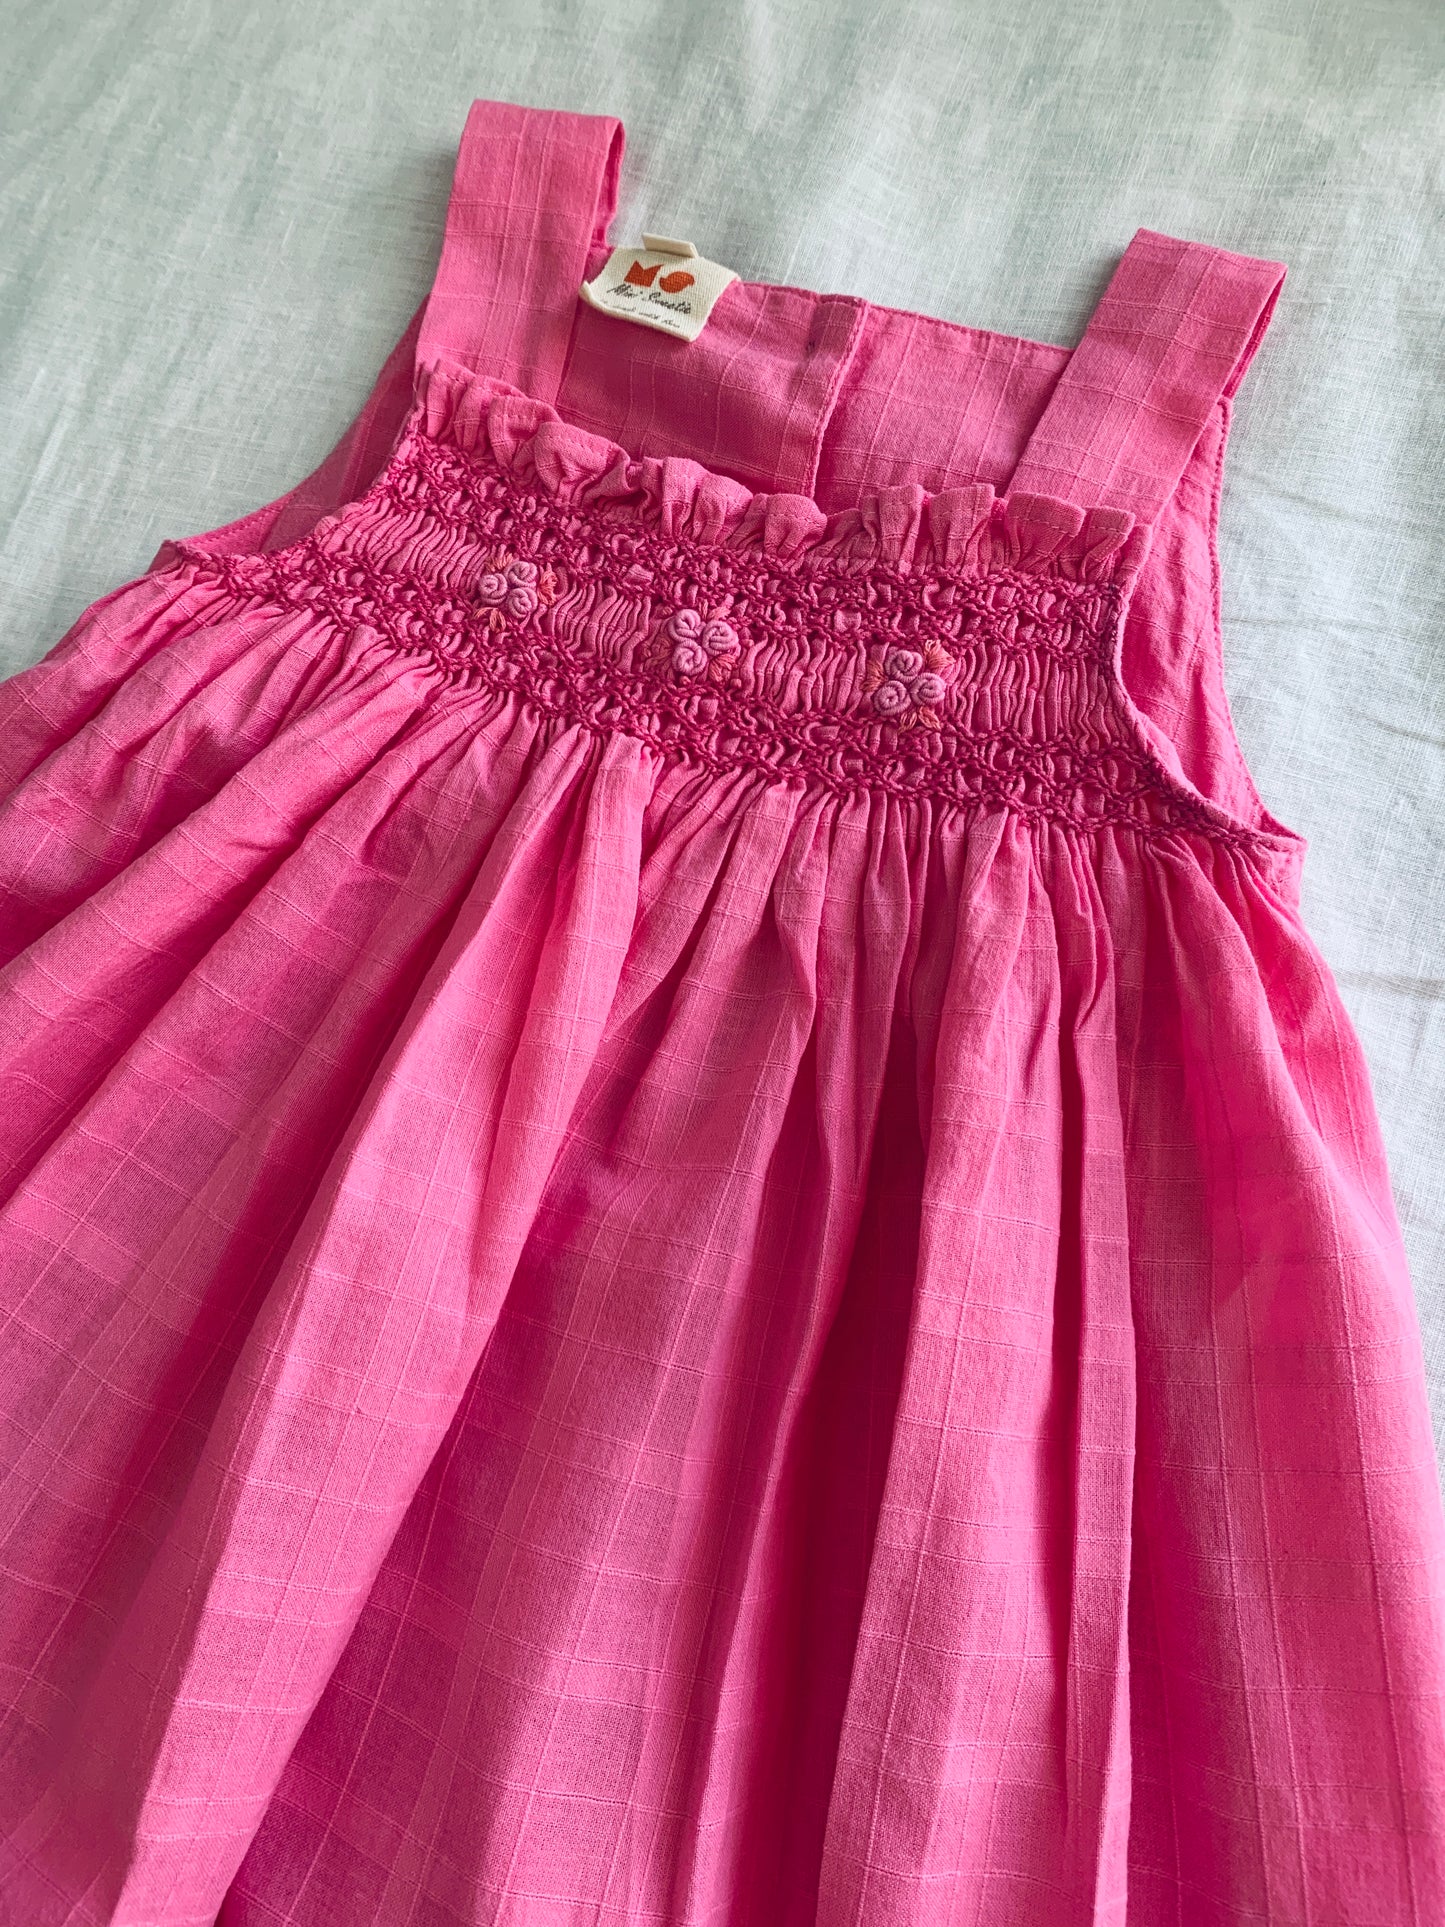 Pink Strap Smocked Dress